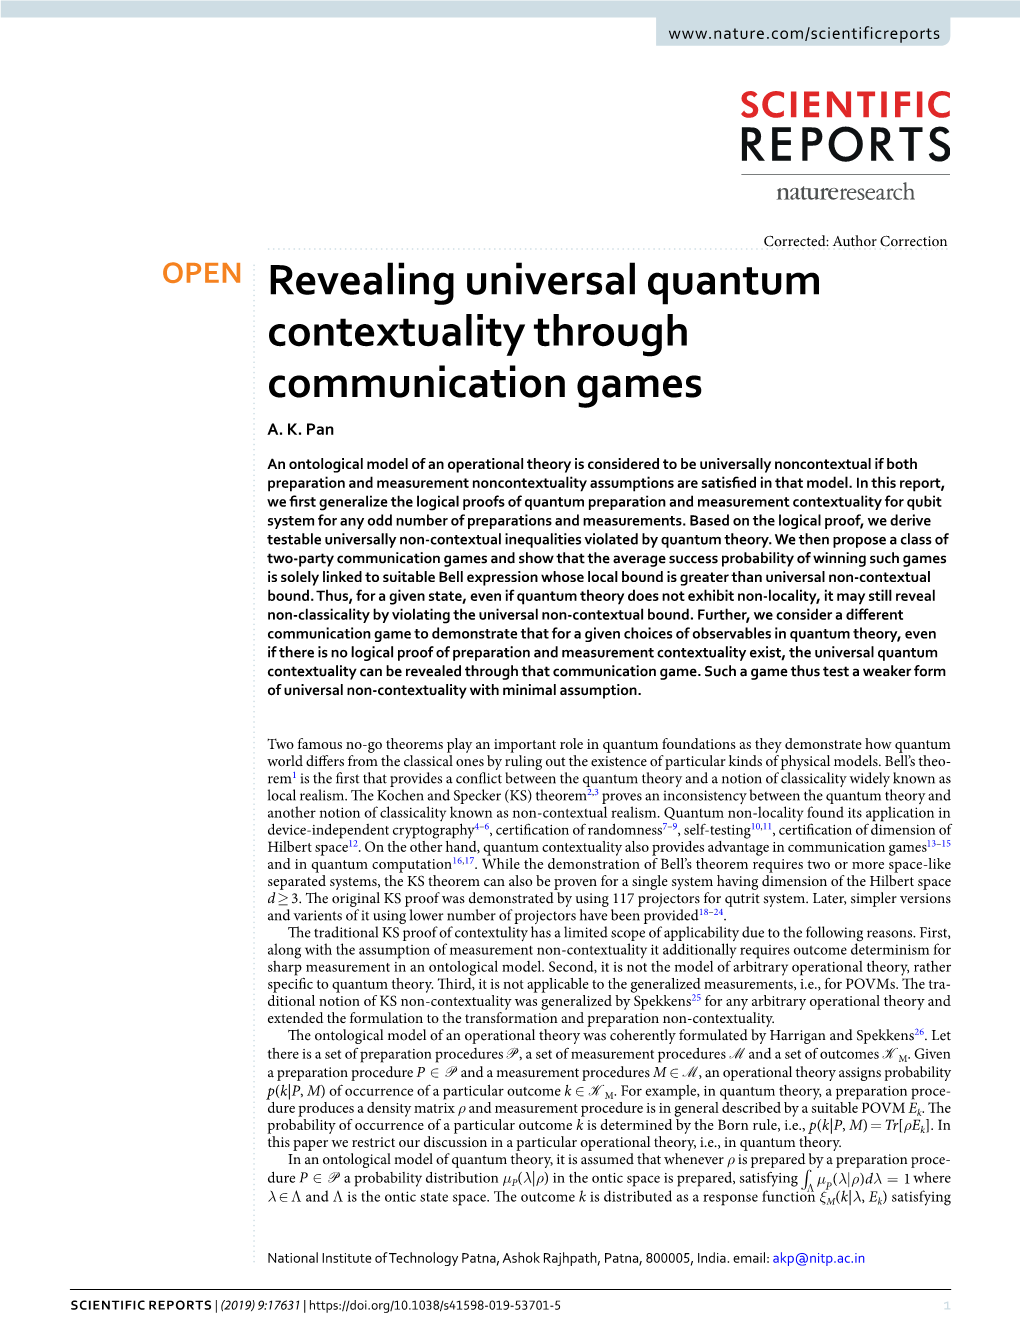 Revealing Universal Quantum Contextuality Through Communication Games A